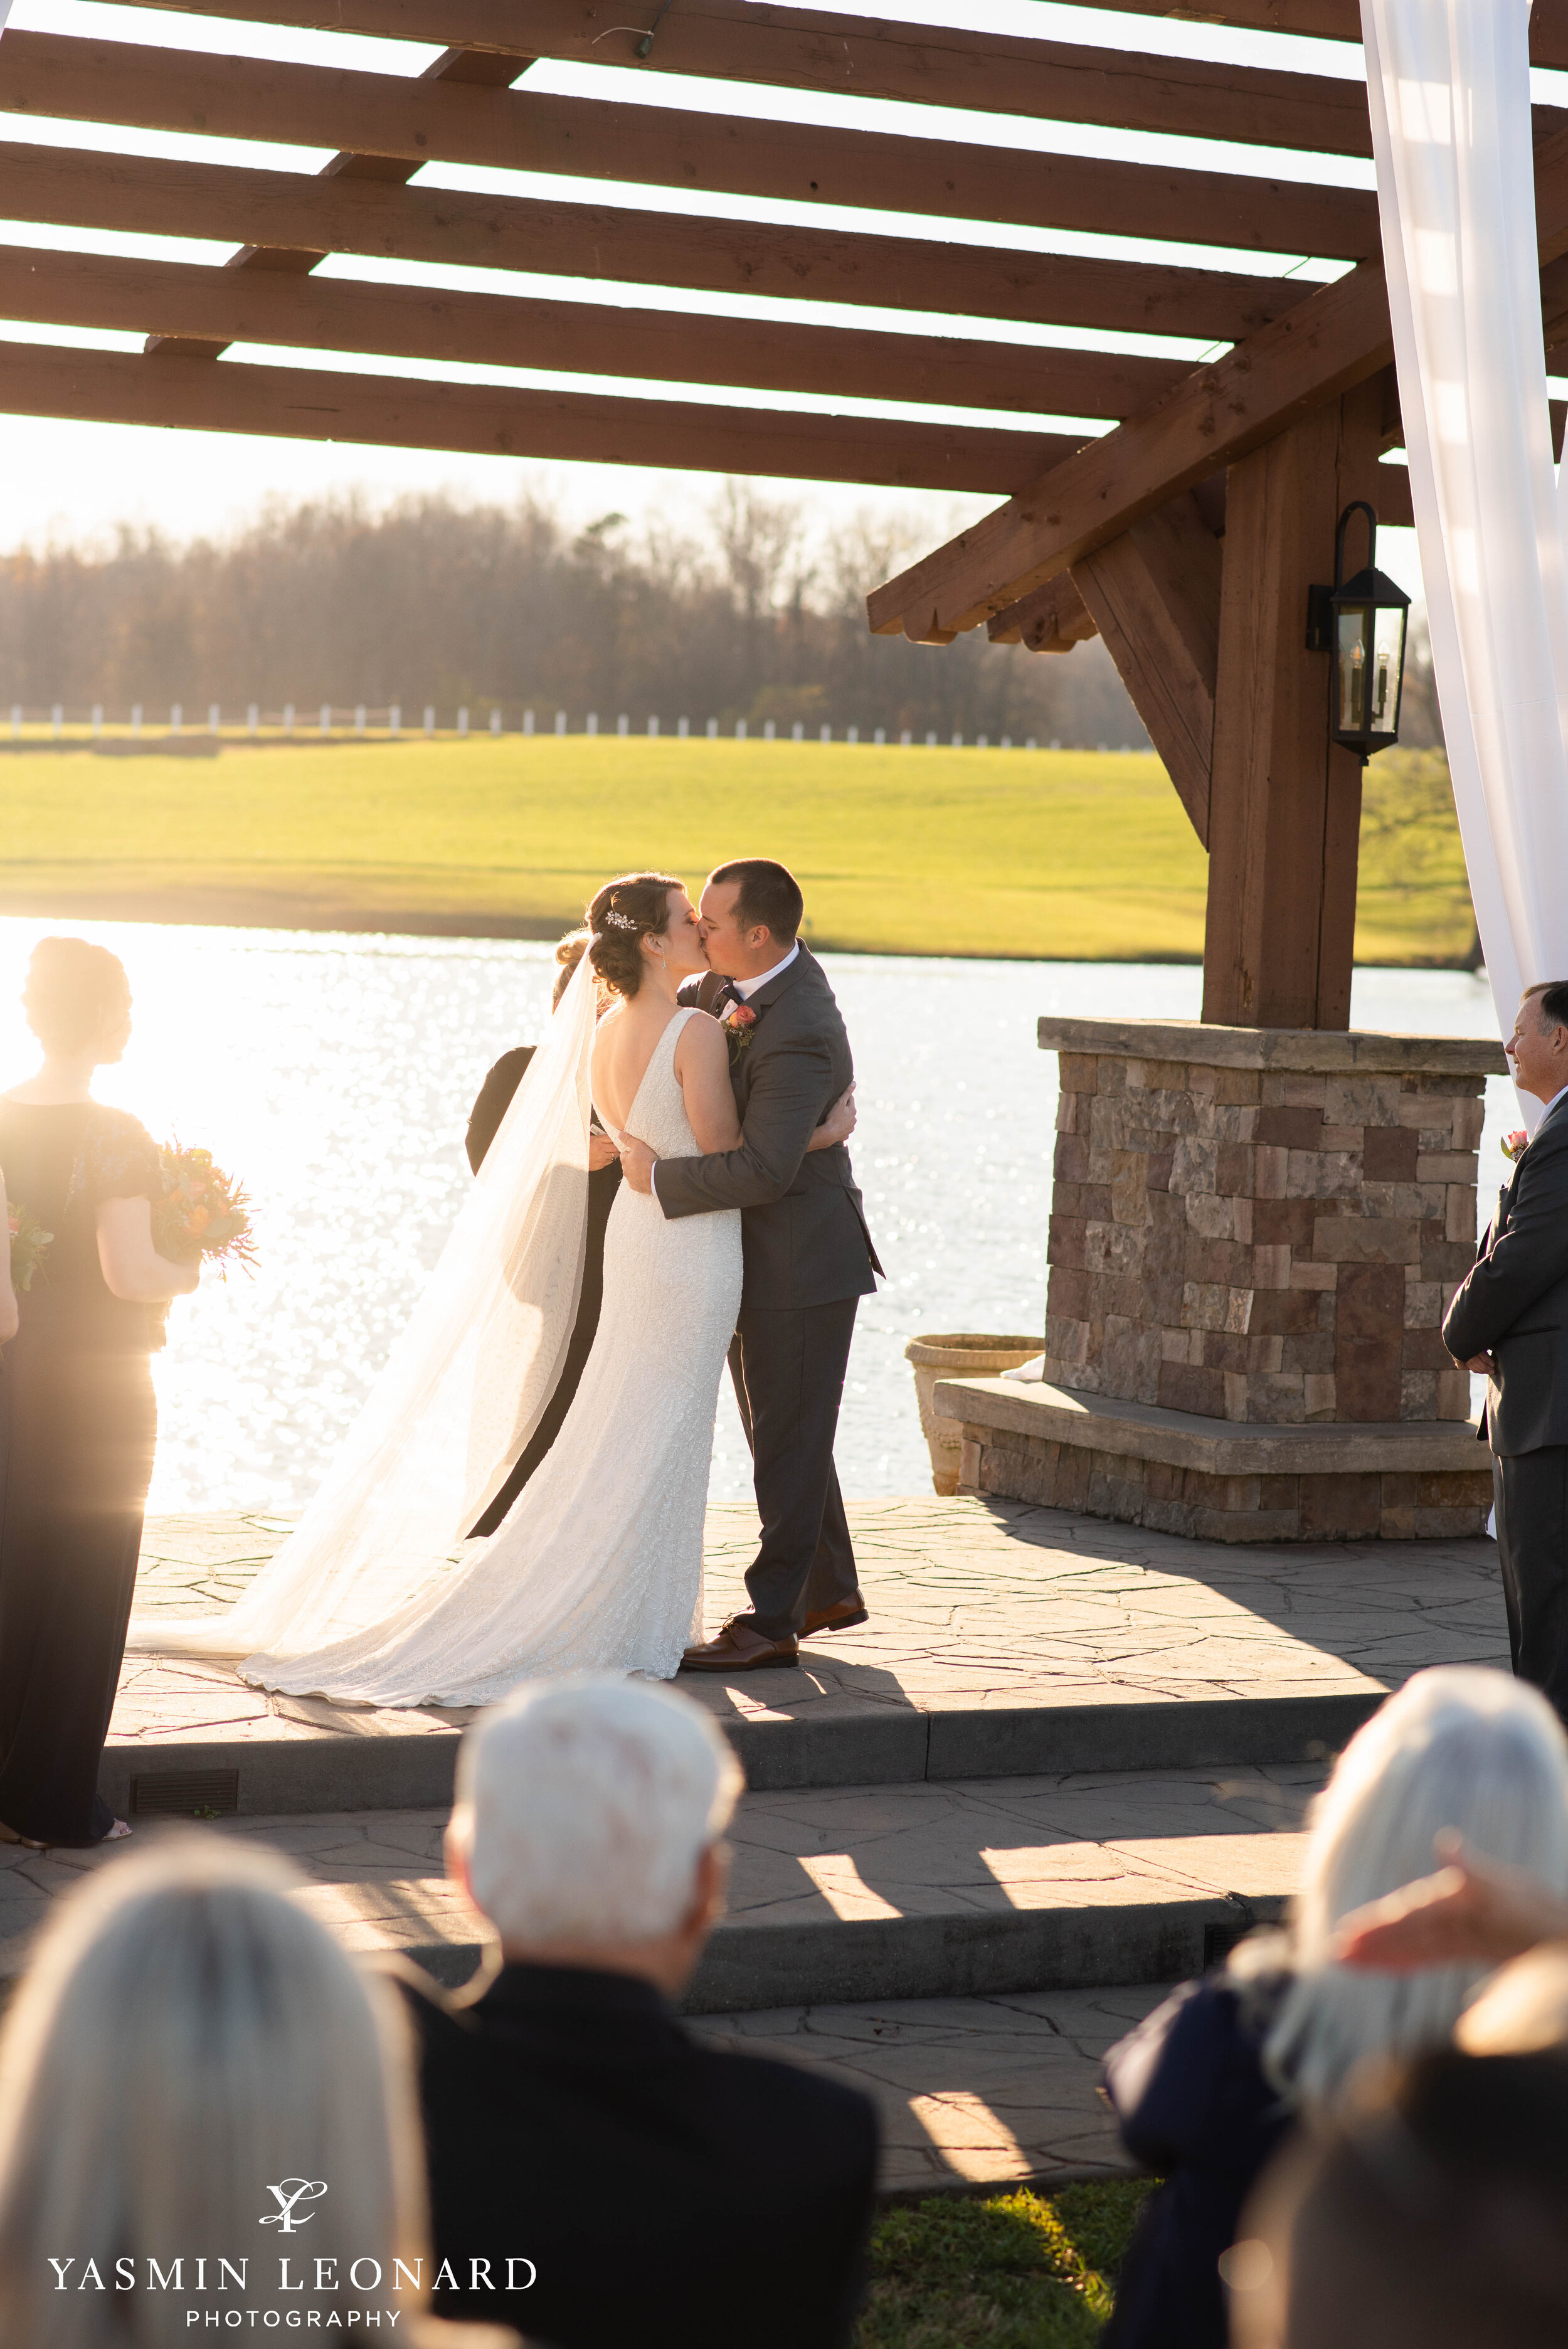 Jared and Katy - Adaumont Farms - High Point Weddings - NC Barn Weddings - Yasmin Leonard Photography-25.jpg